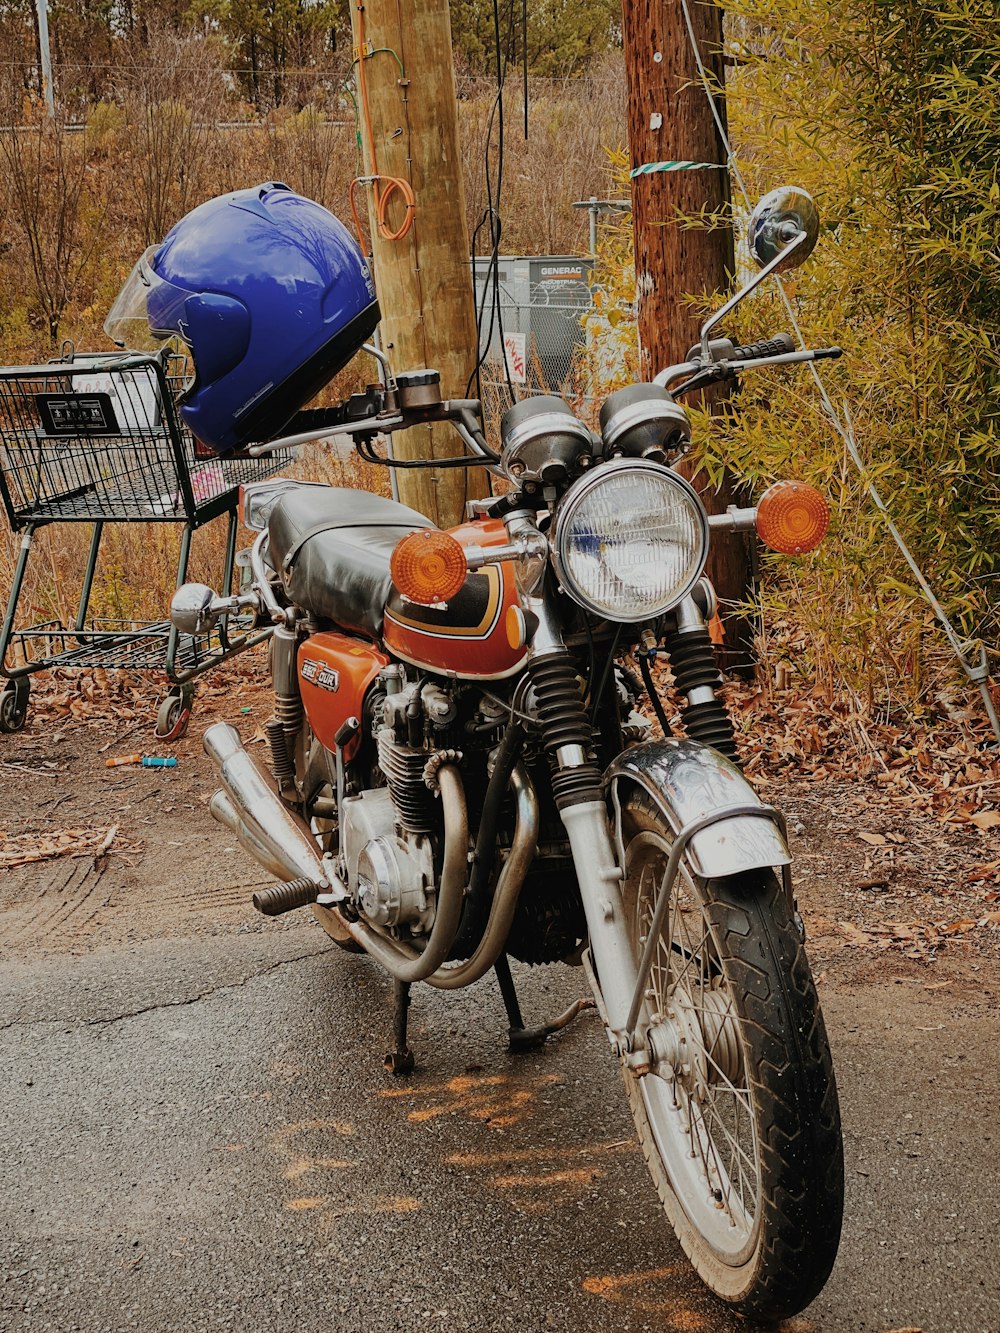 una motocicleta estacionada al costado de la carretera